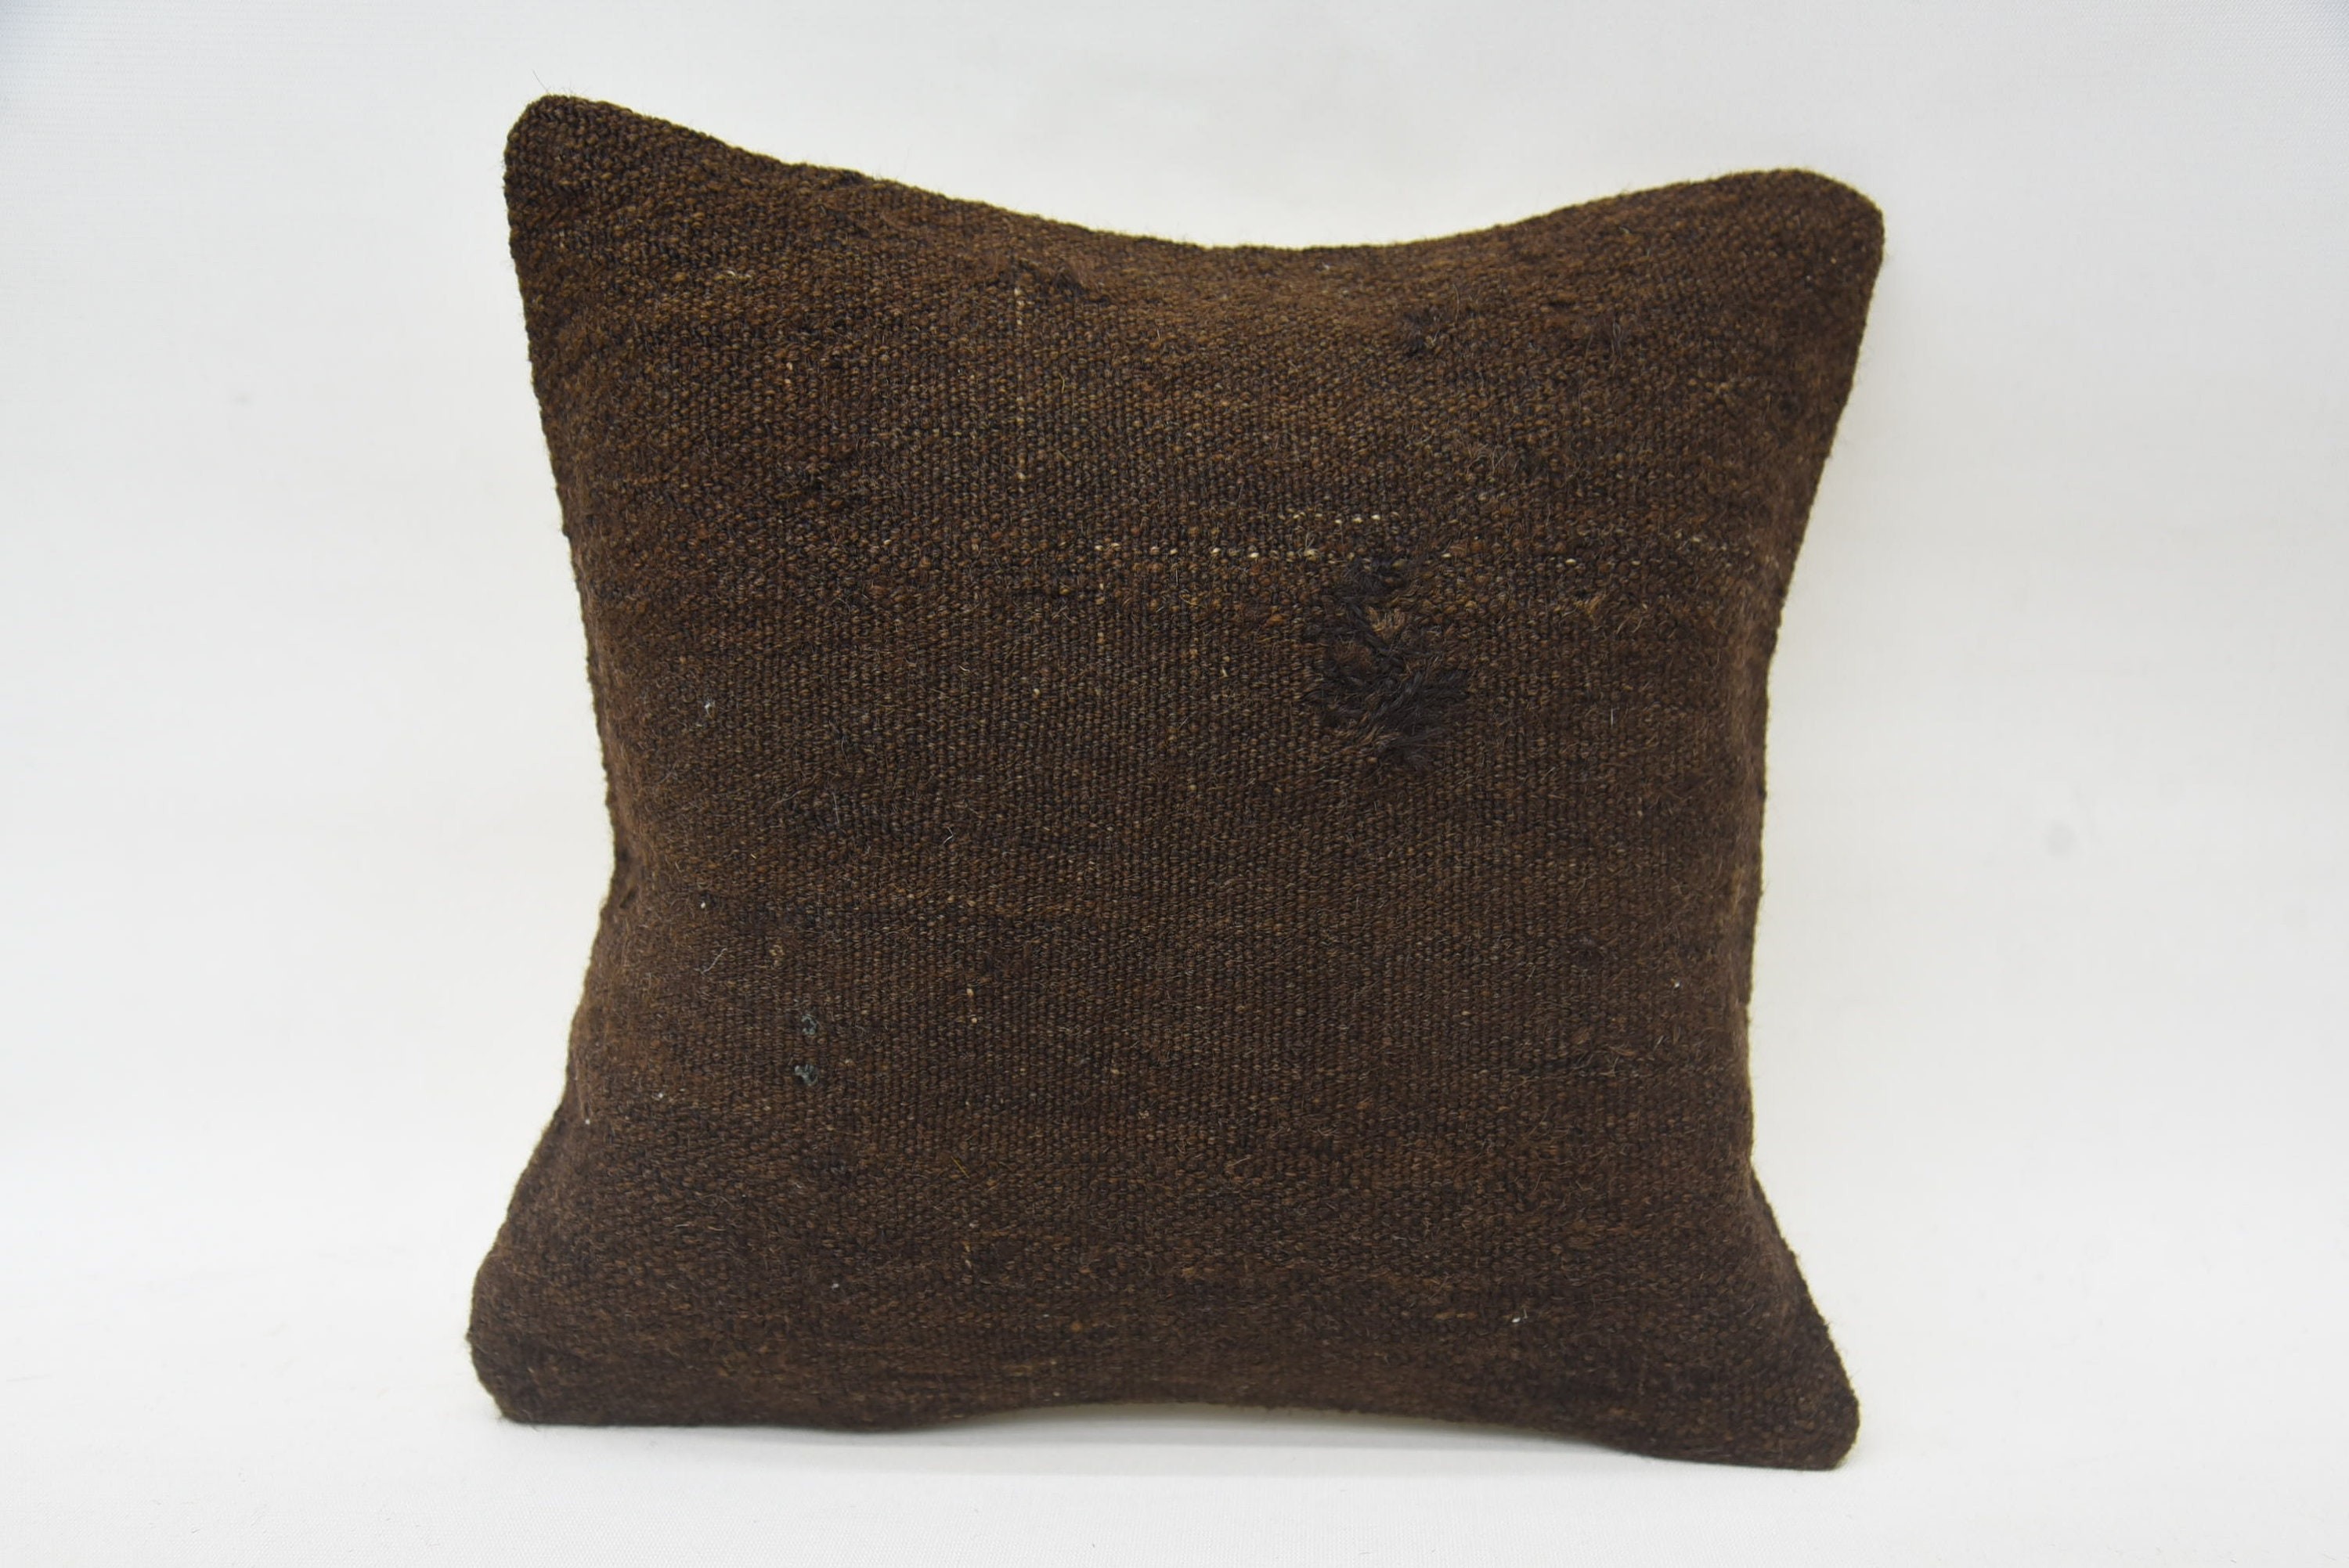 12"x12" Brown Cushion, Kilim Pillow, Turkish Pillow, Boho Pillow, Shabby Chic Pillow Sham, Vintage Kilim Pillow Pillow Cover